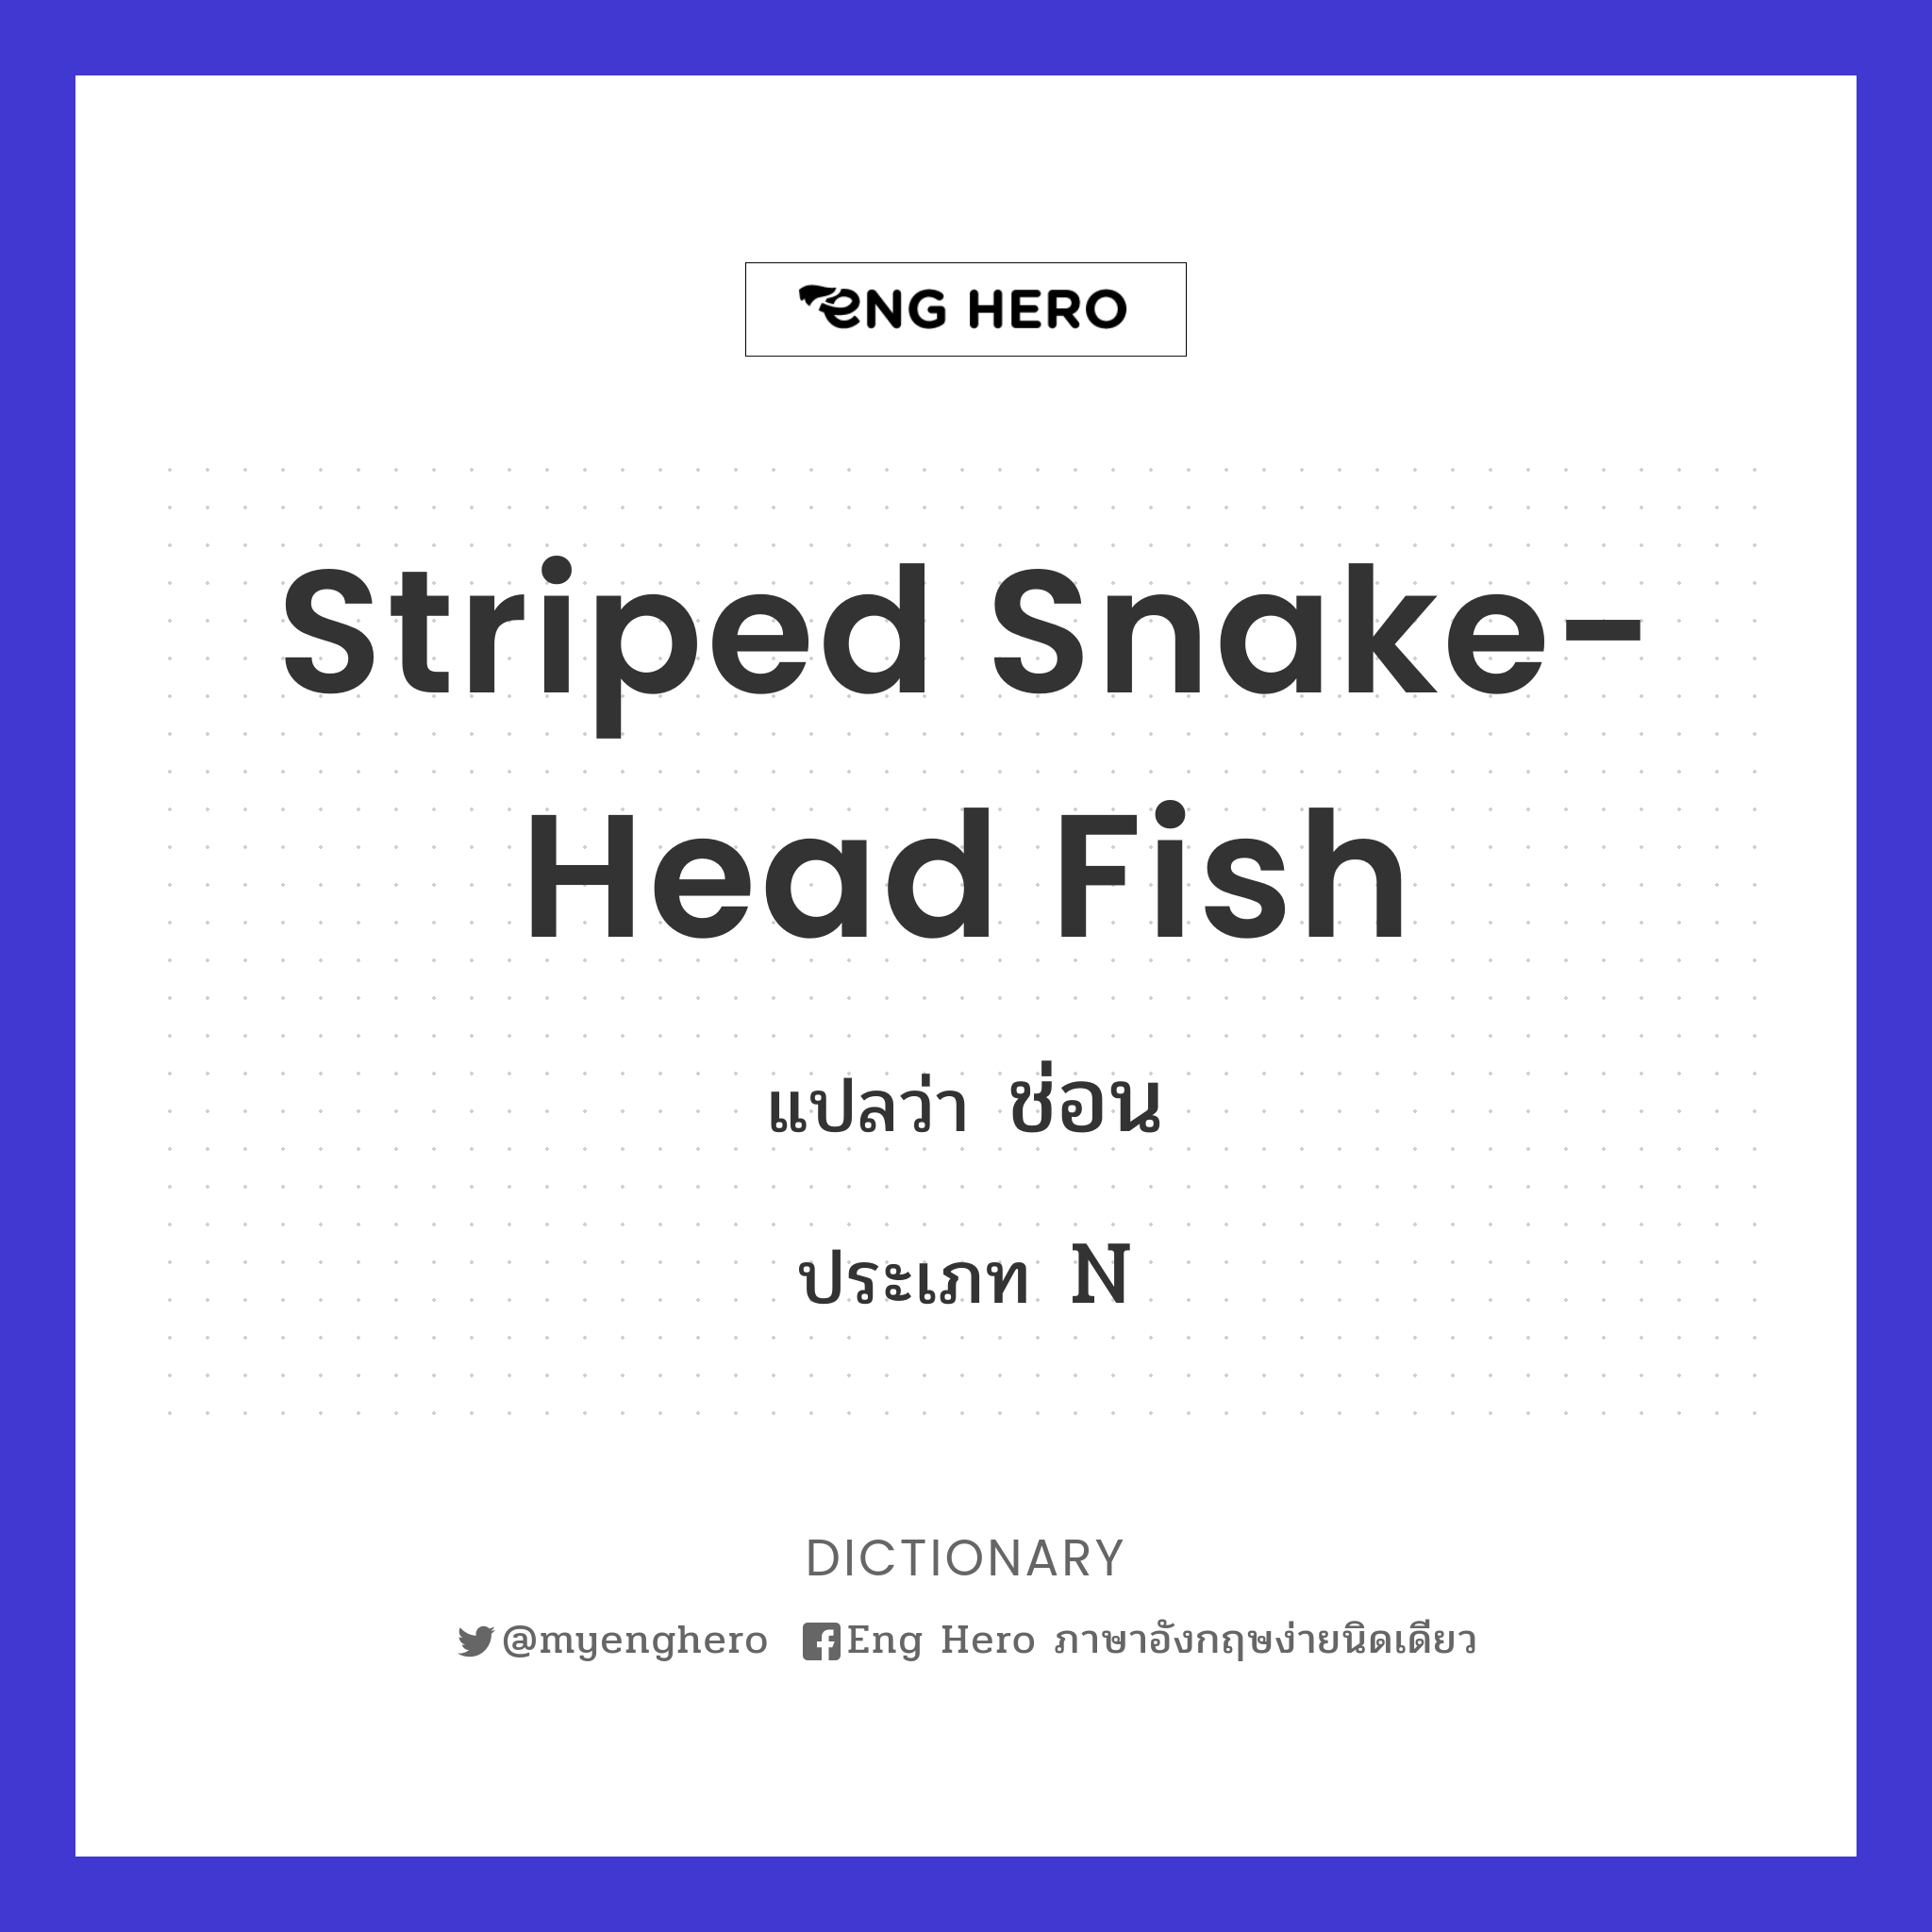 striped snake-head fish